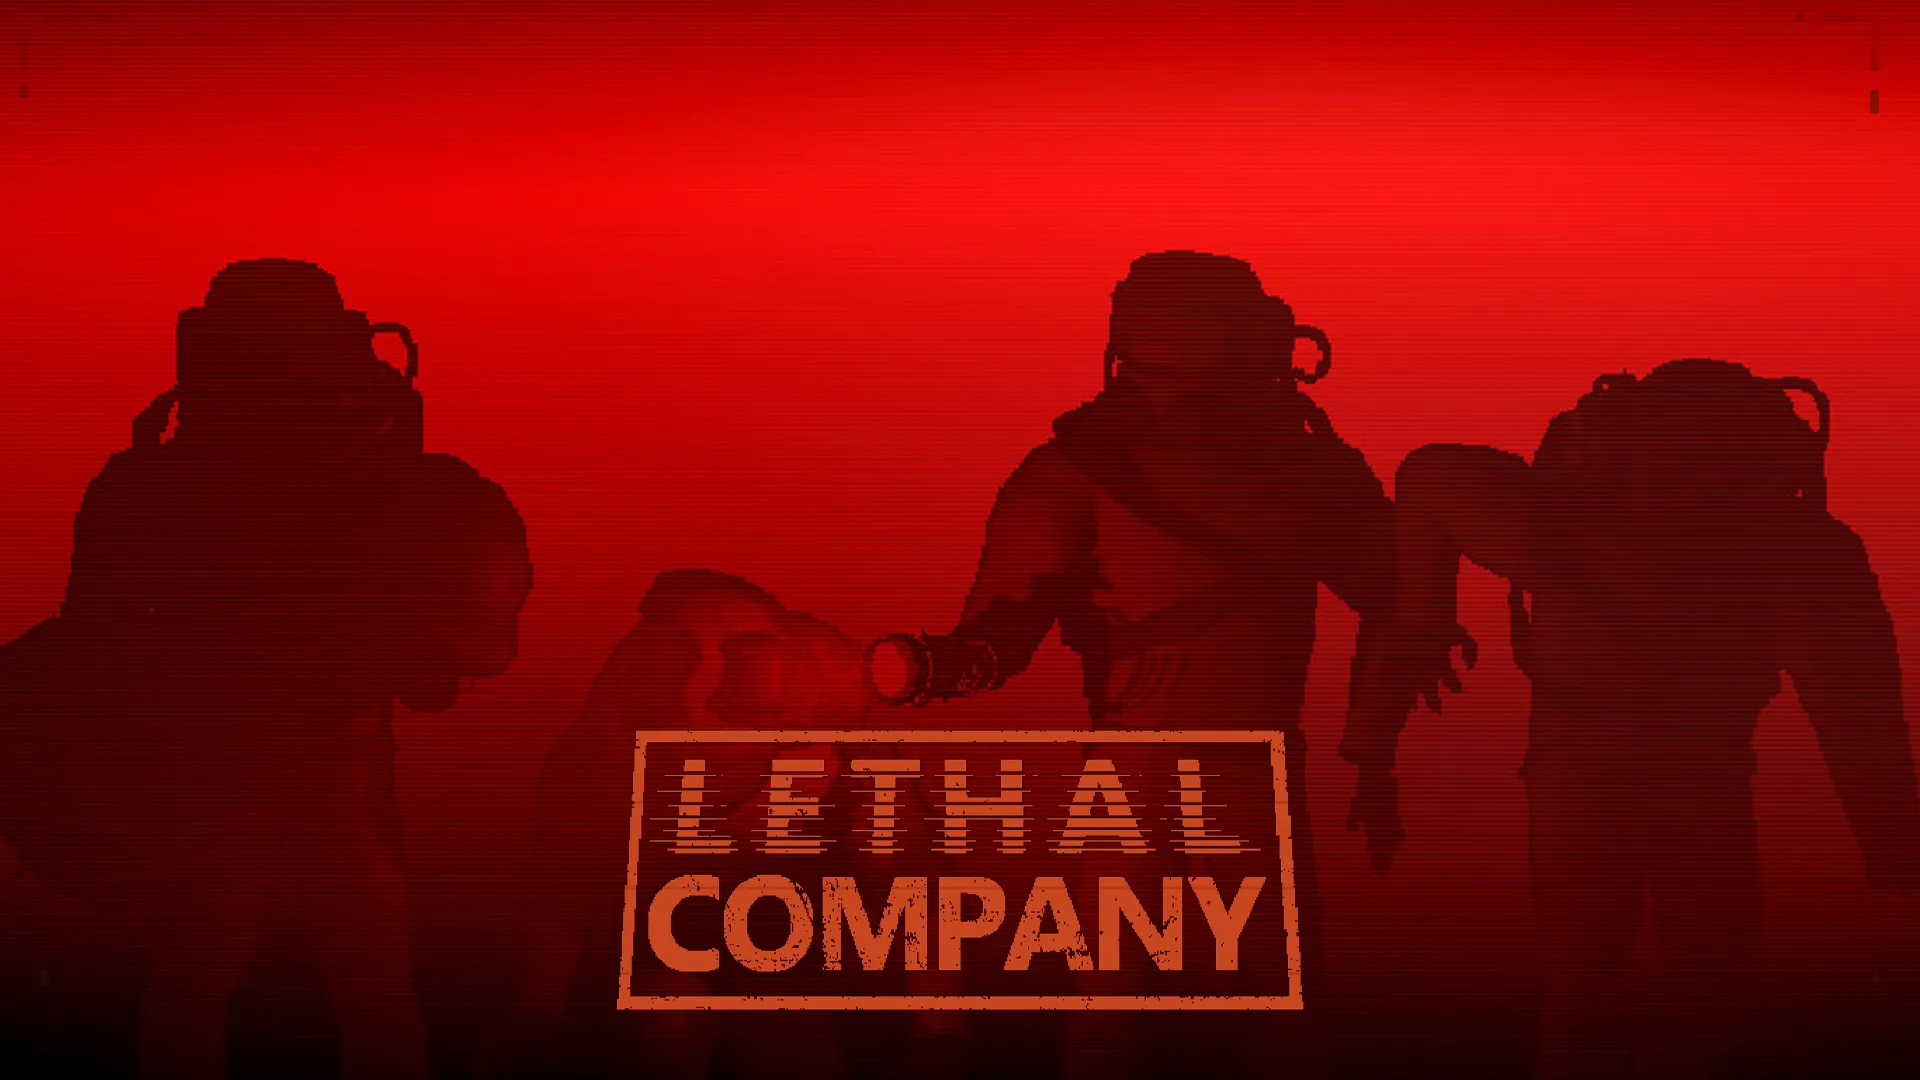 Lethal-Company-1-1.jpg